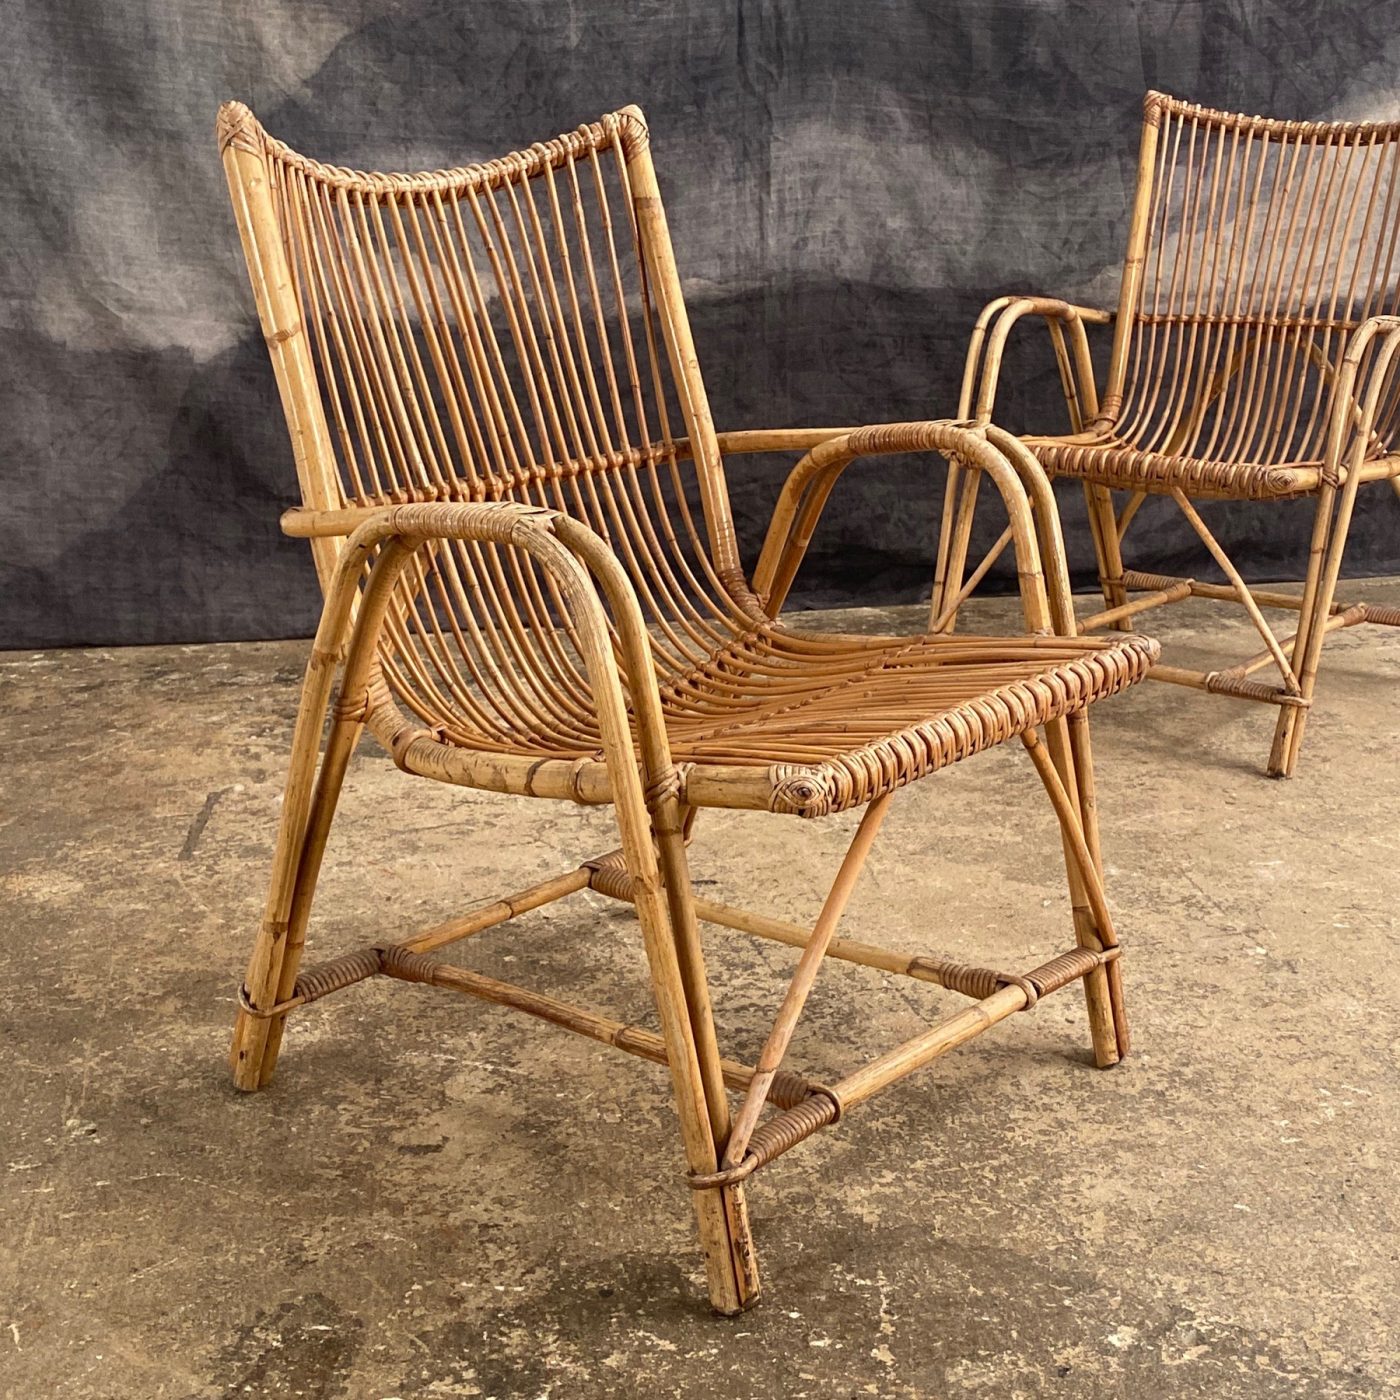 vintage-rattan-chairs0002